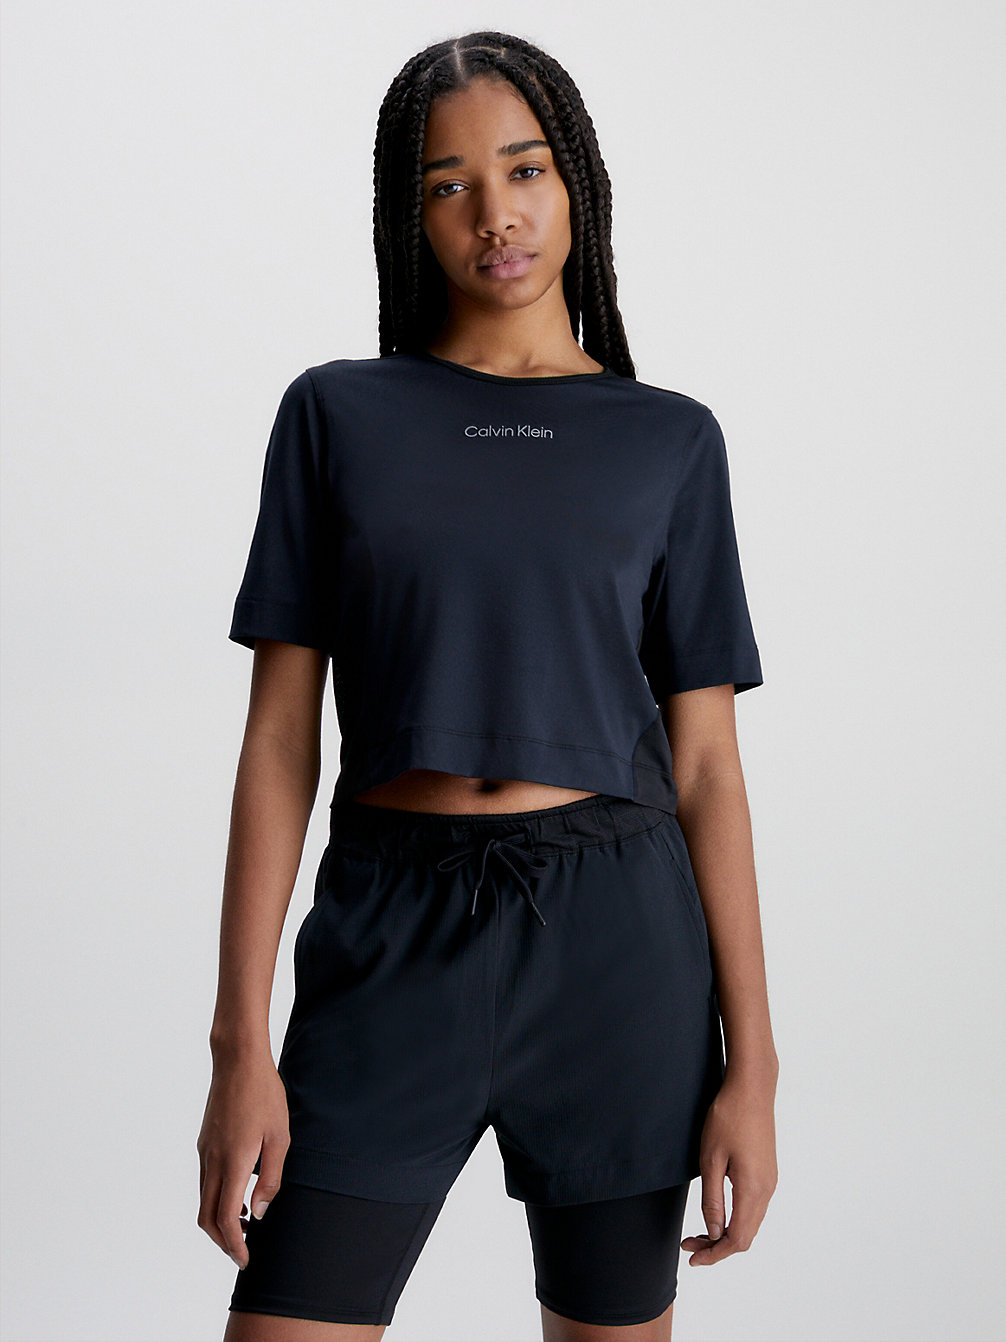 BLACK BEAUTY > T-Shirt Sportowy > undefined Kobiety - Calvin Klein